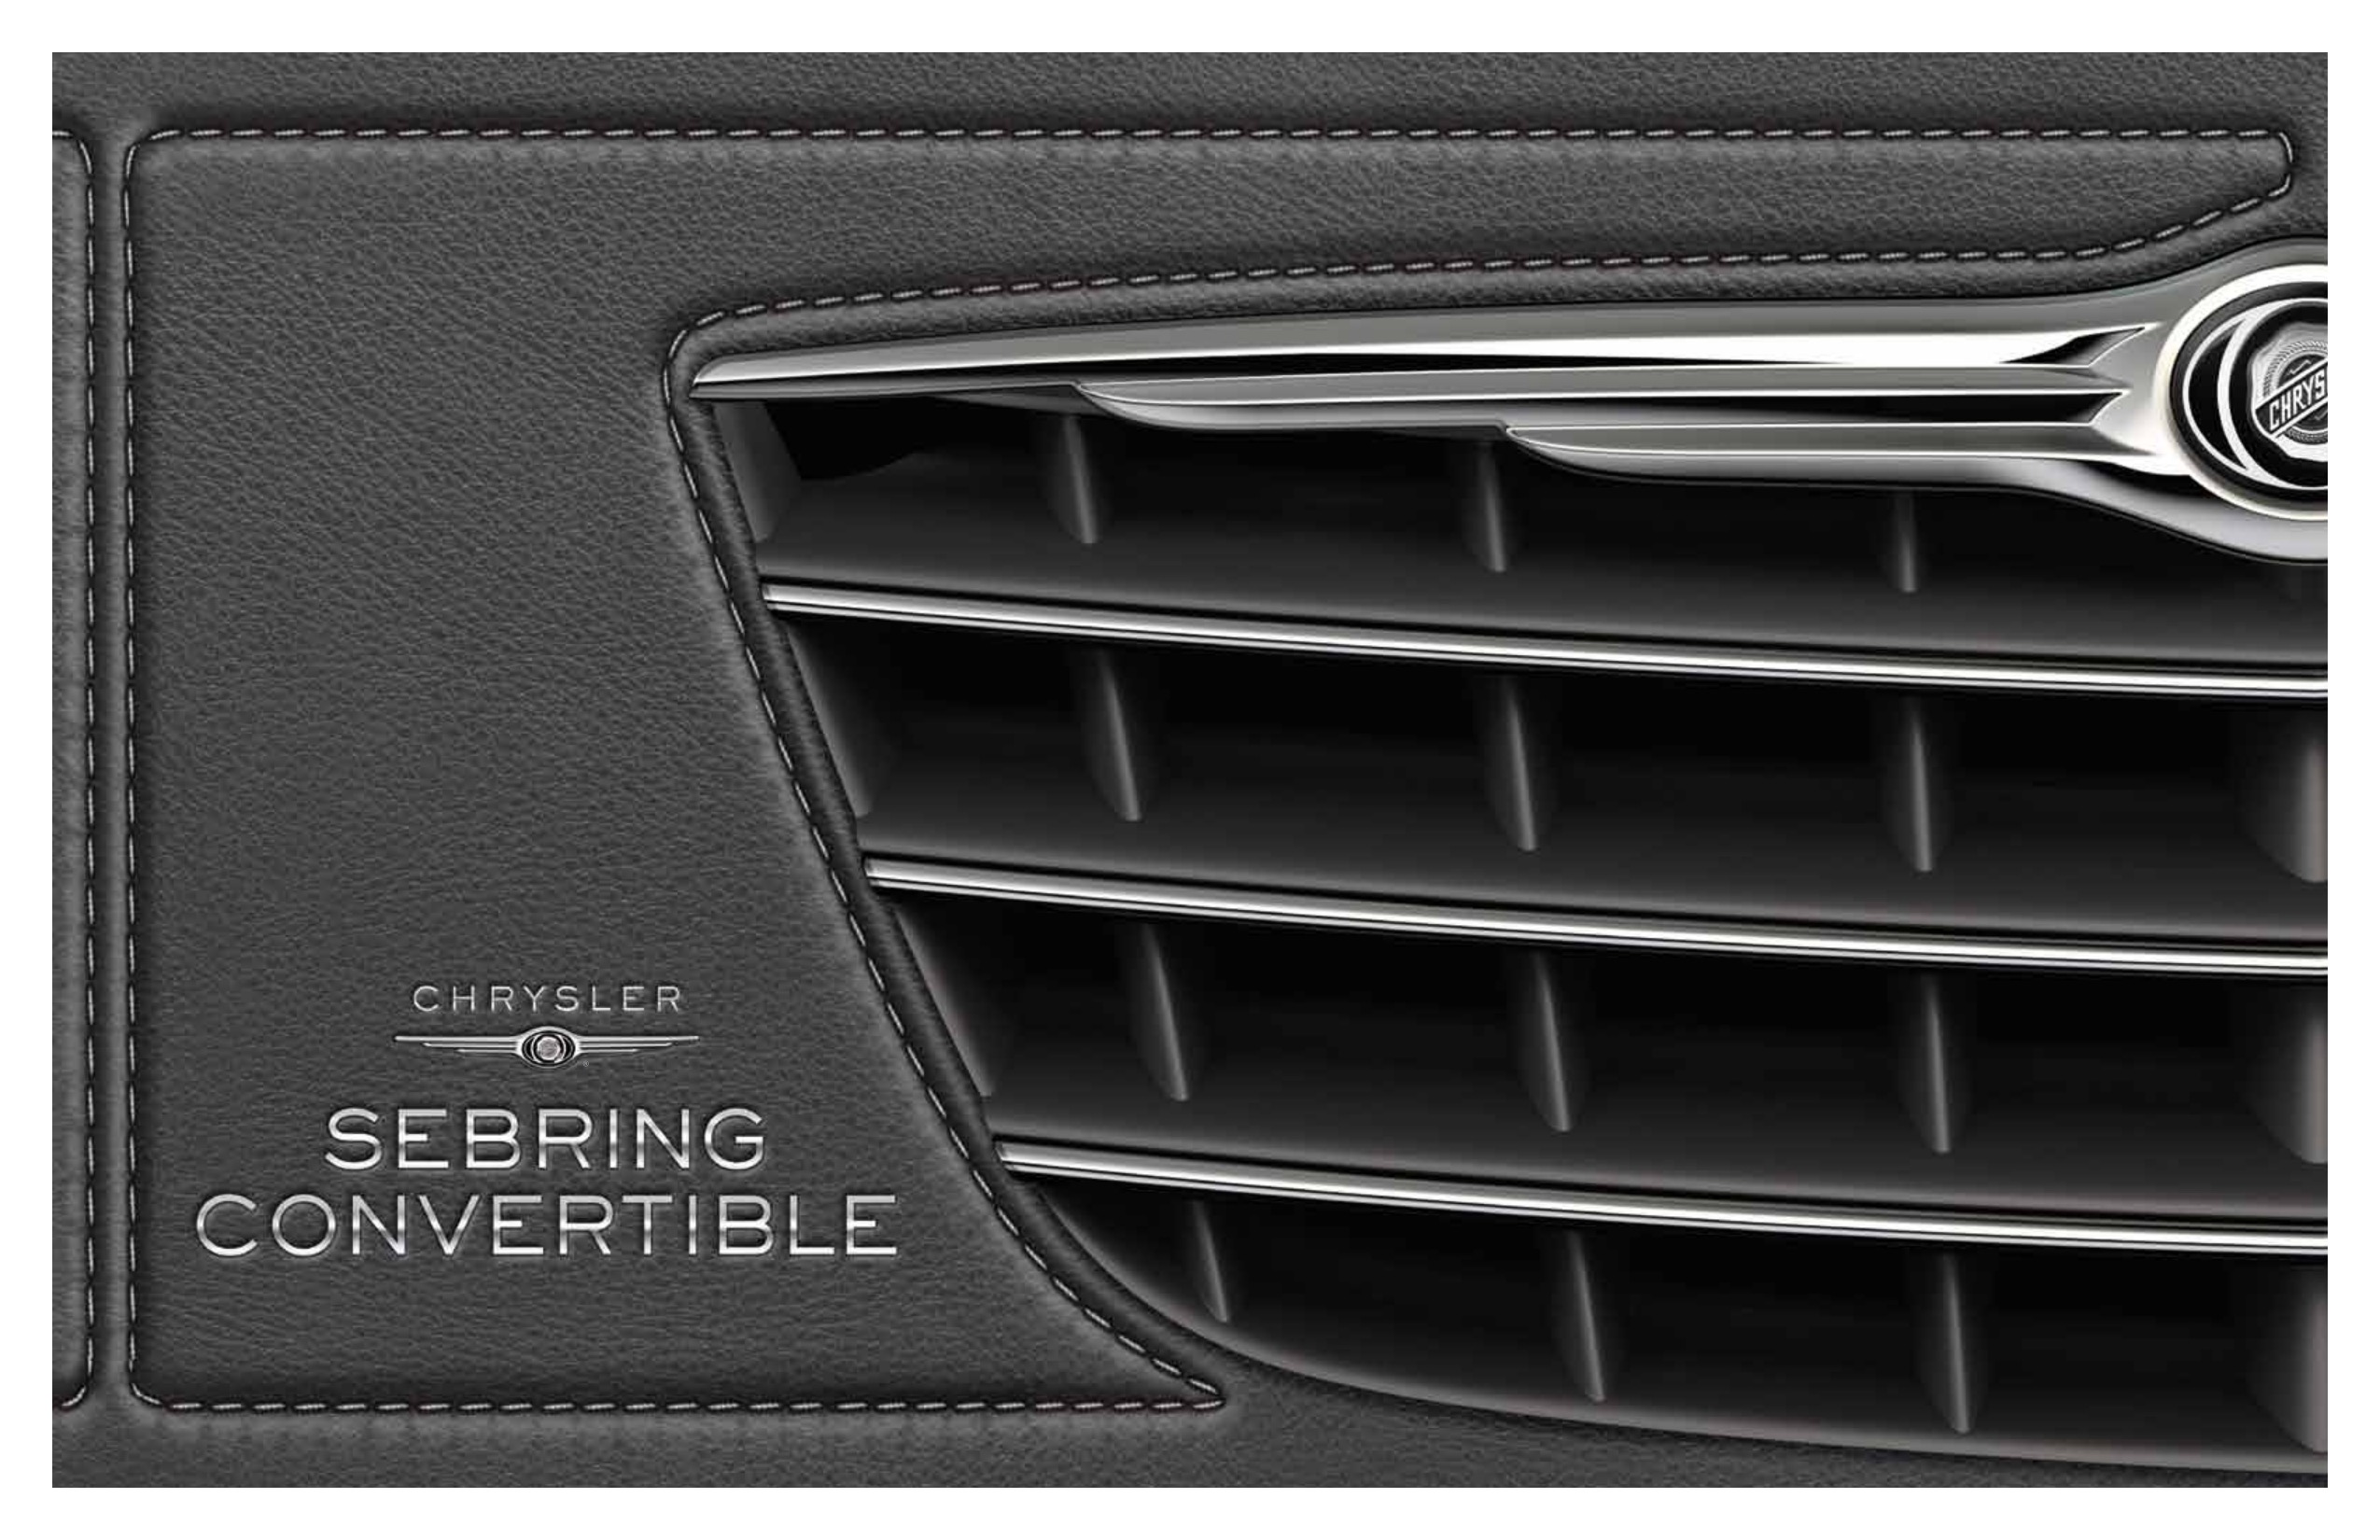 2010 Chrysler Sebring Convertible Brochure